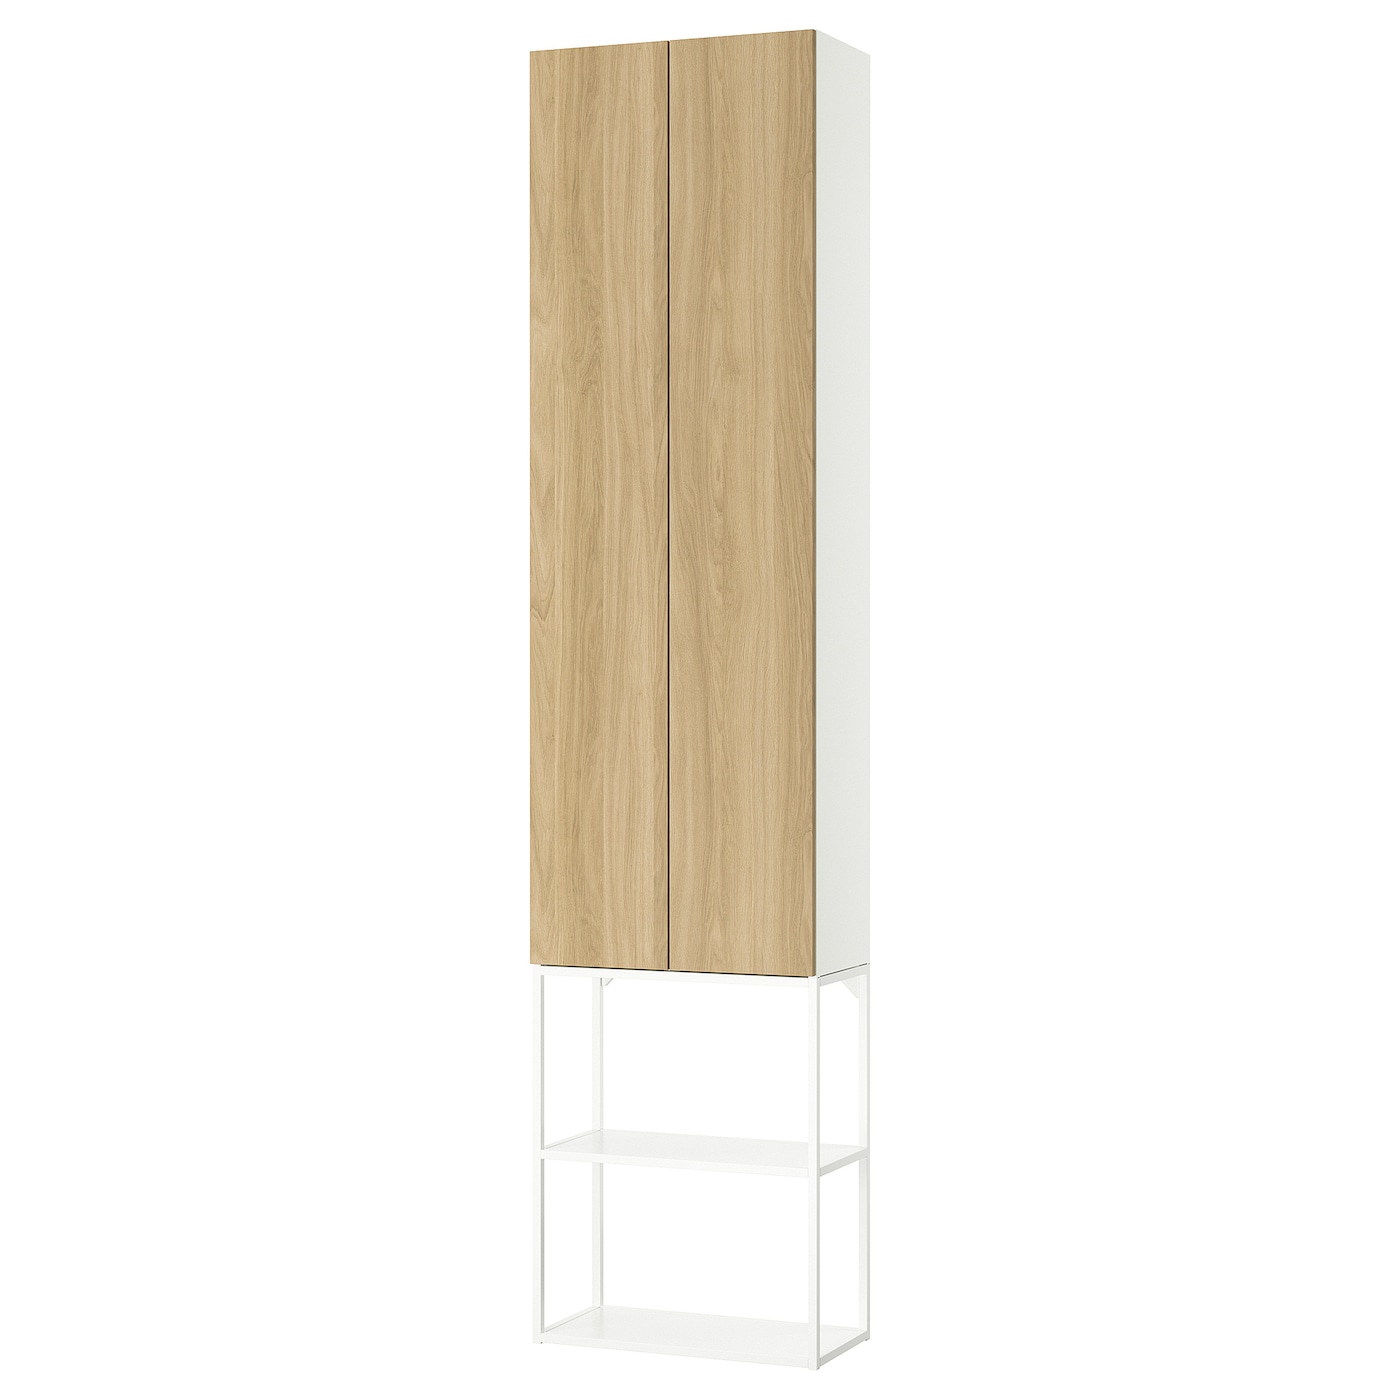 Книжный шкаф - IKEA ENHET/ЭНХЕТ ИКЕА, 60х32х255 см, светло-коричневый/белый